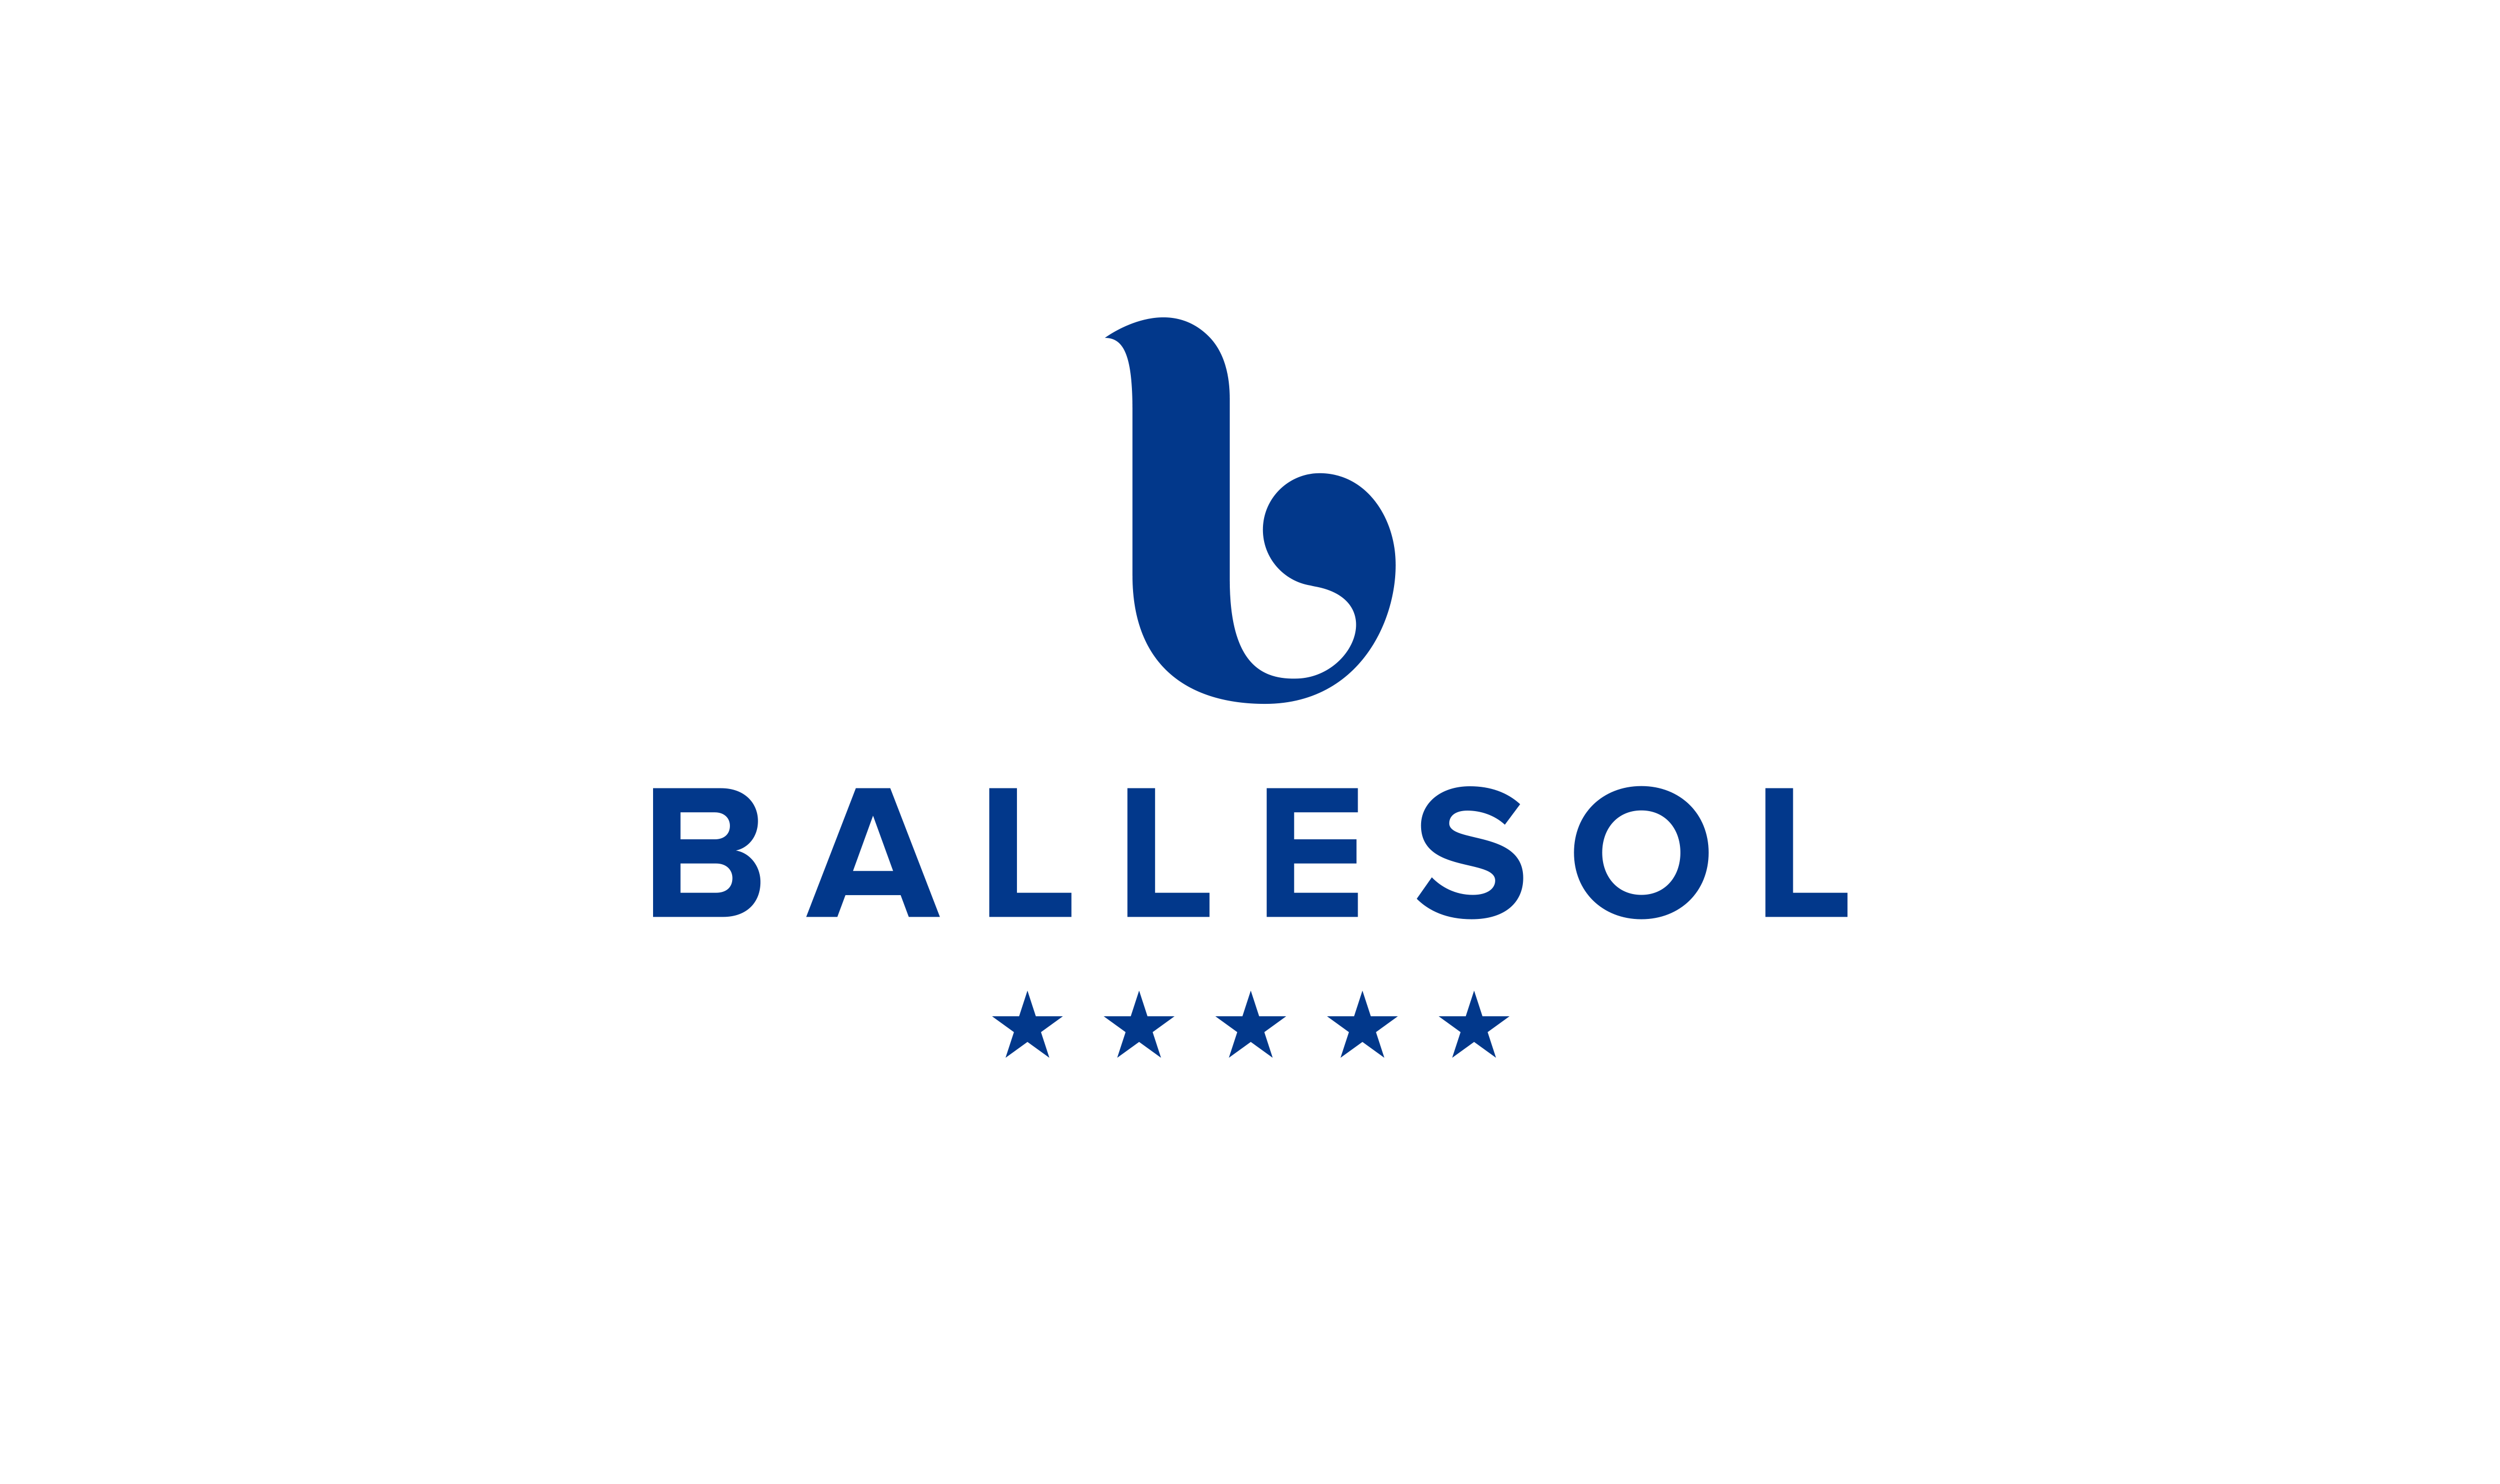 BALLESOL branding gestion marca